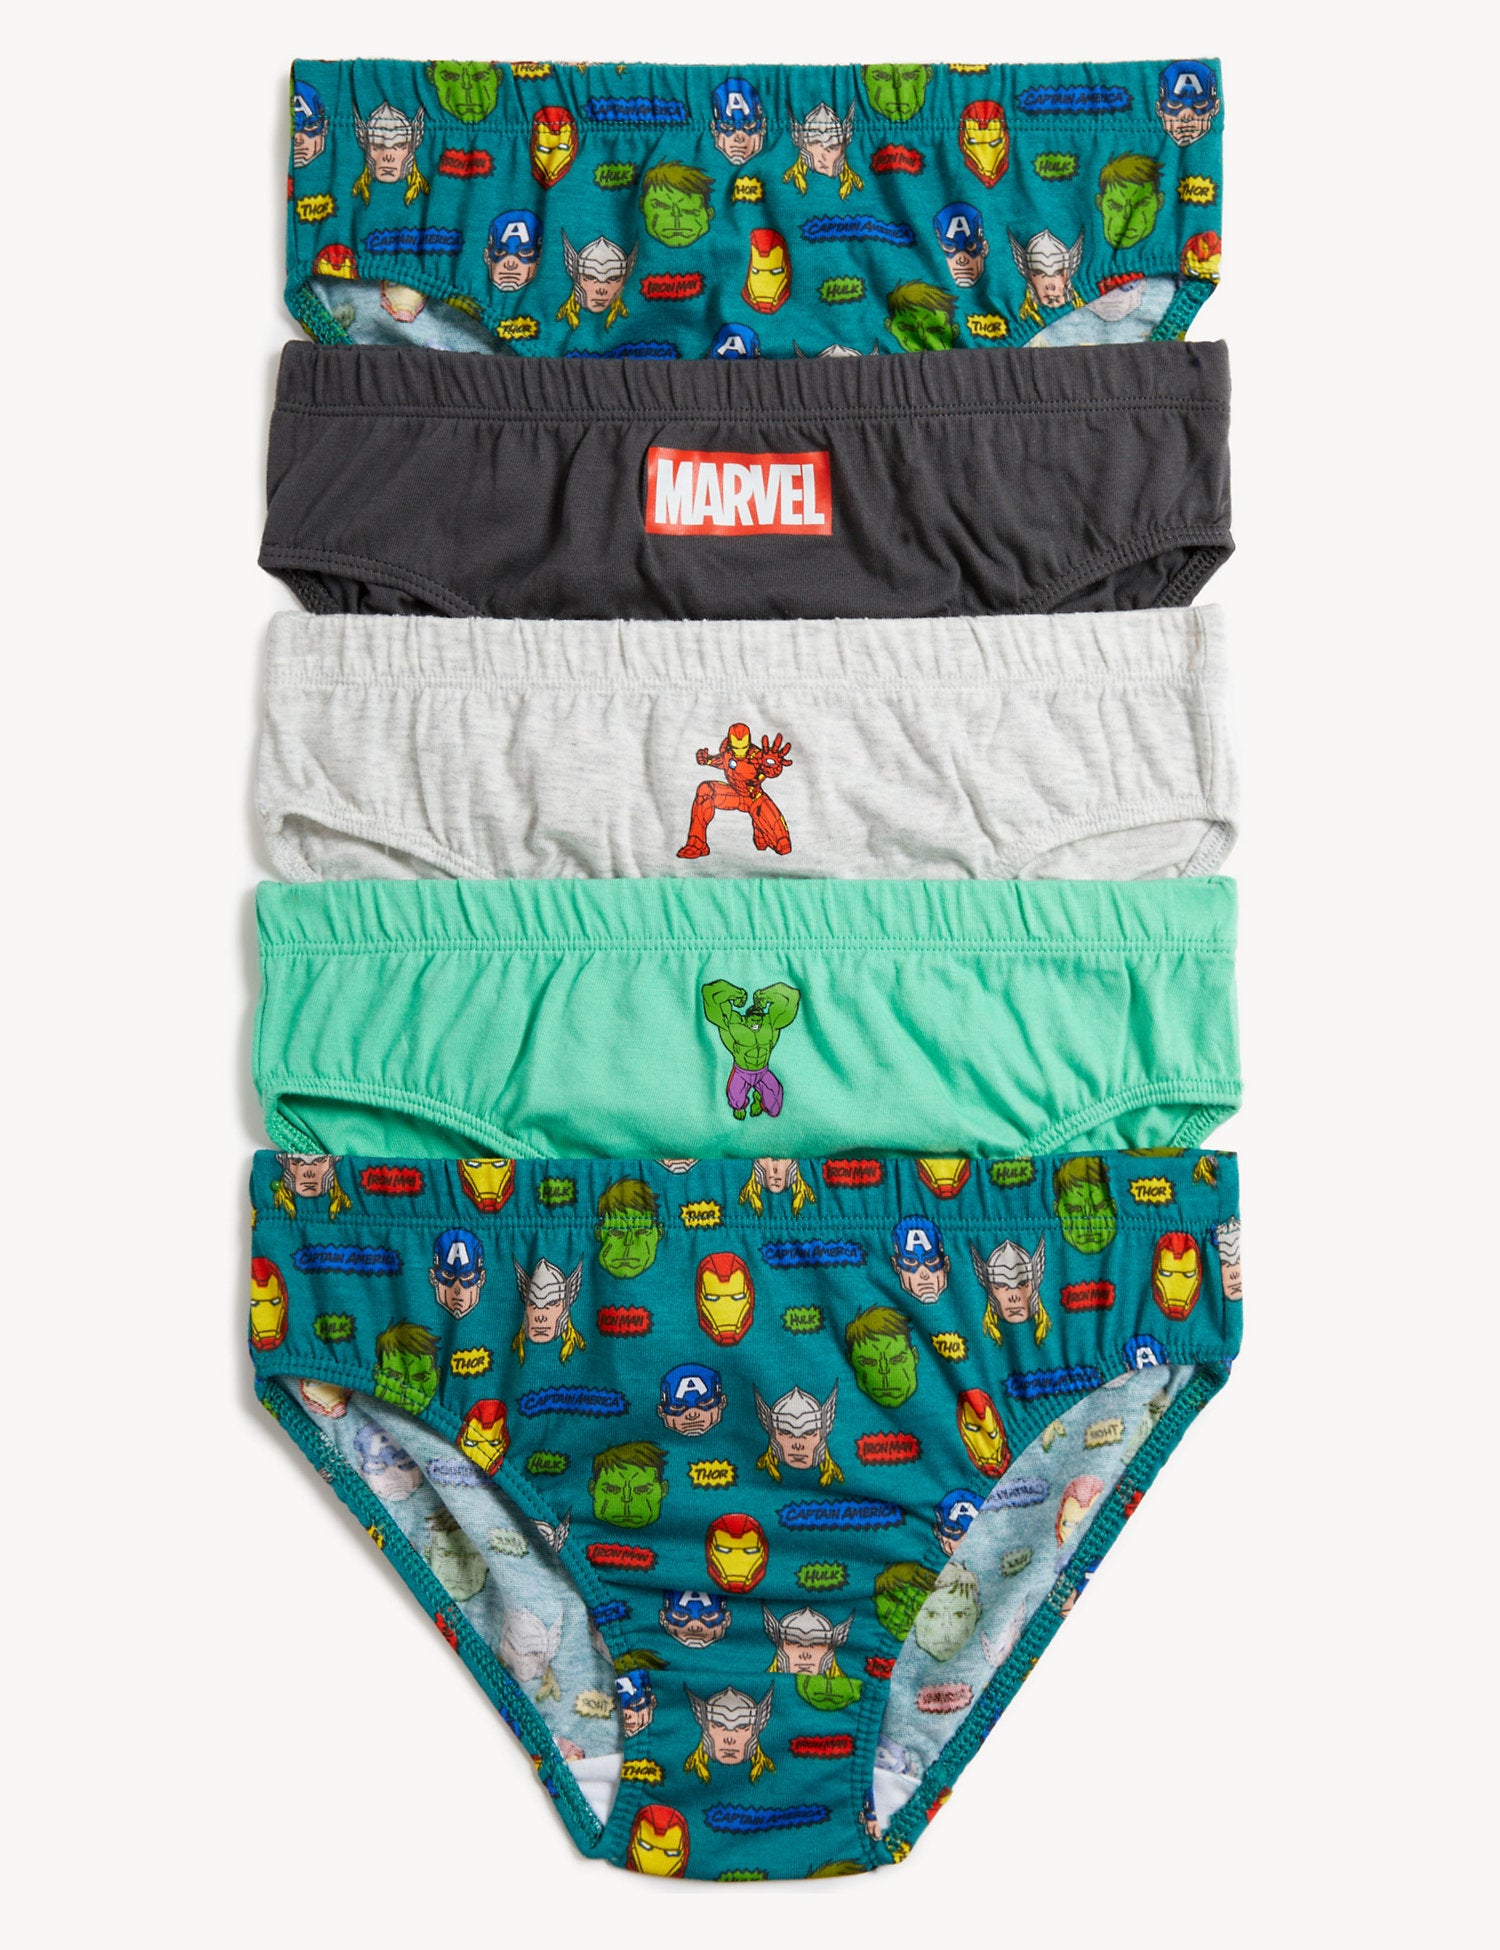 Almost like Marvel - Mister Versatile Swimsuit Edition 